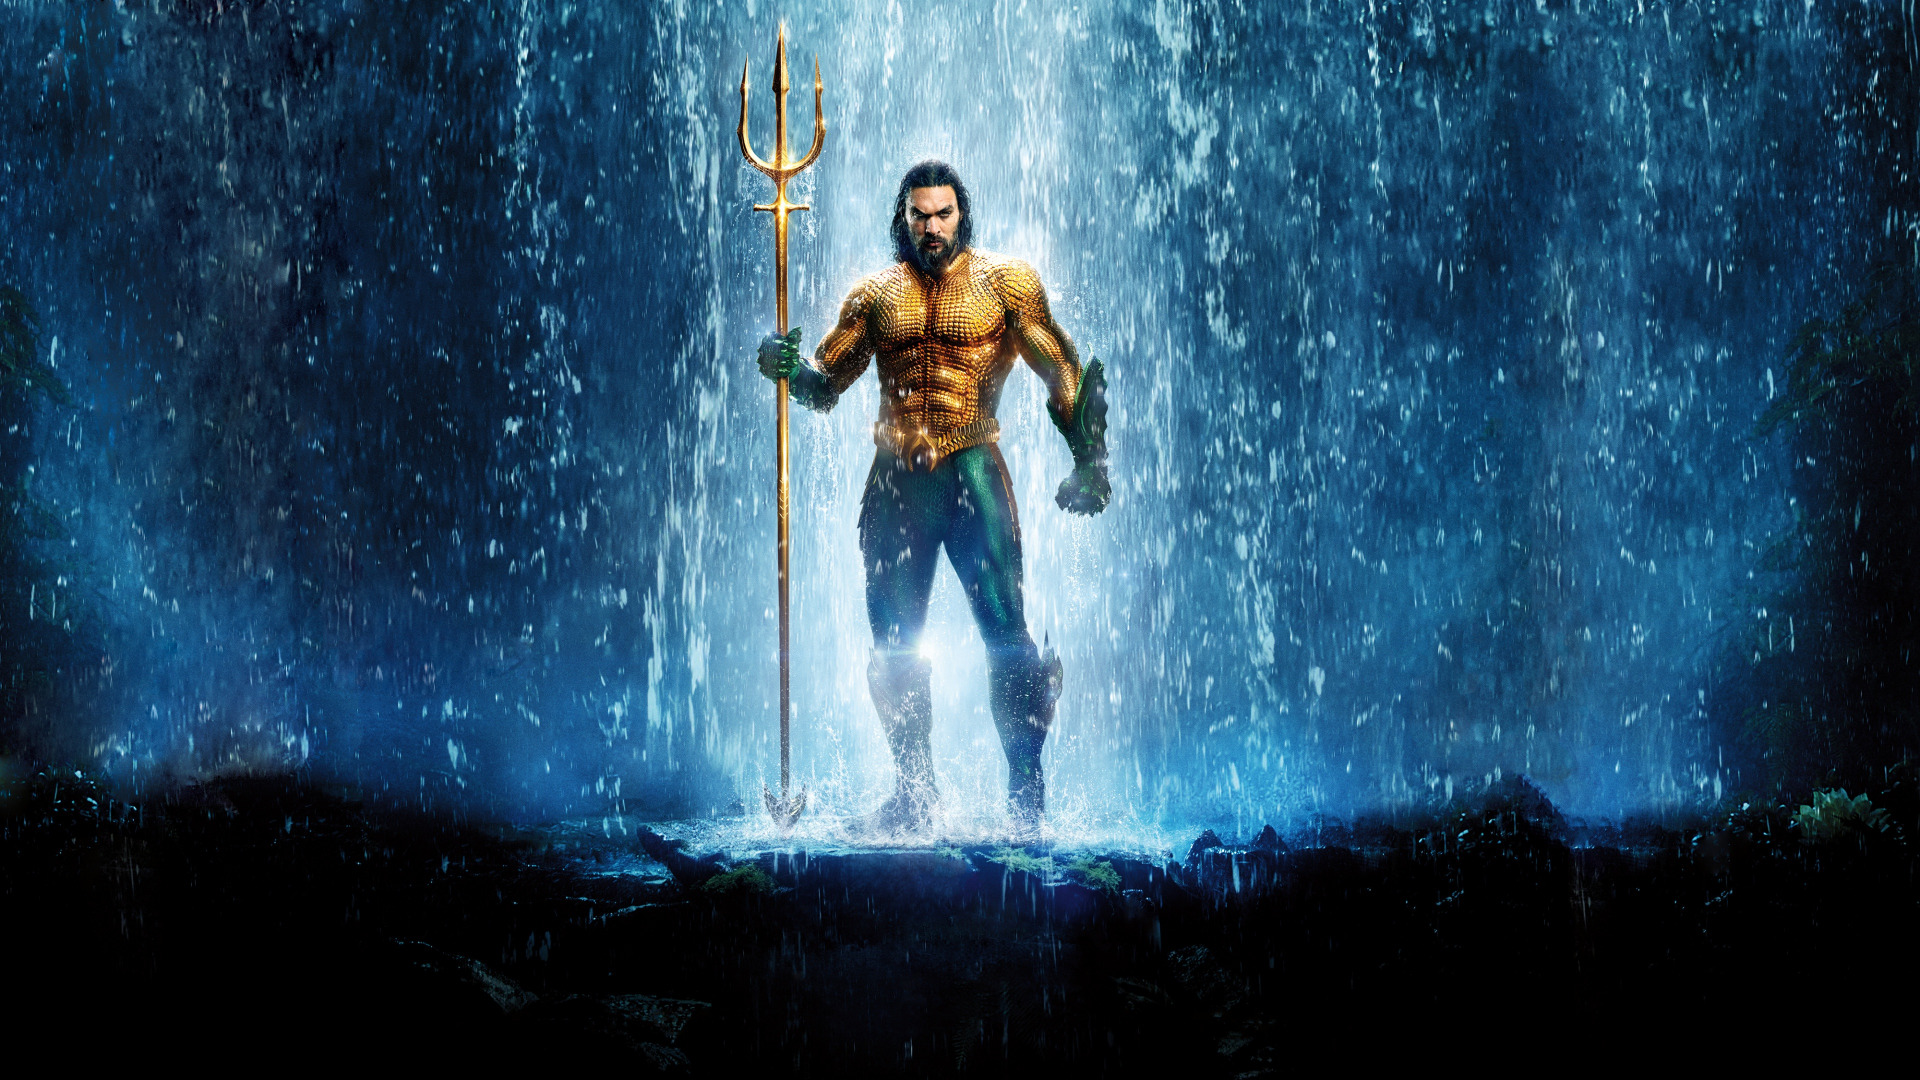 People 1920x1080 Jason Momoa DC Comics Aquaman superhero Justice League standing water muscles beard looking at viewer digital art